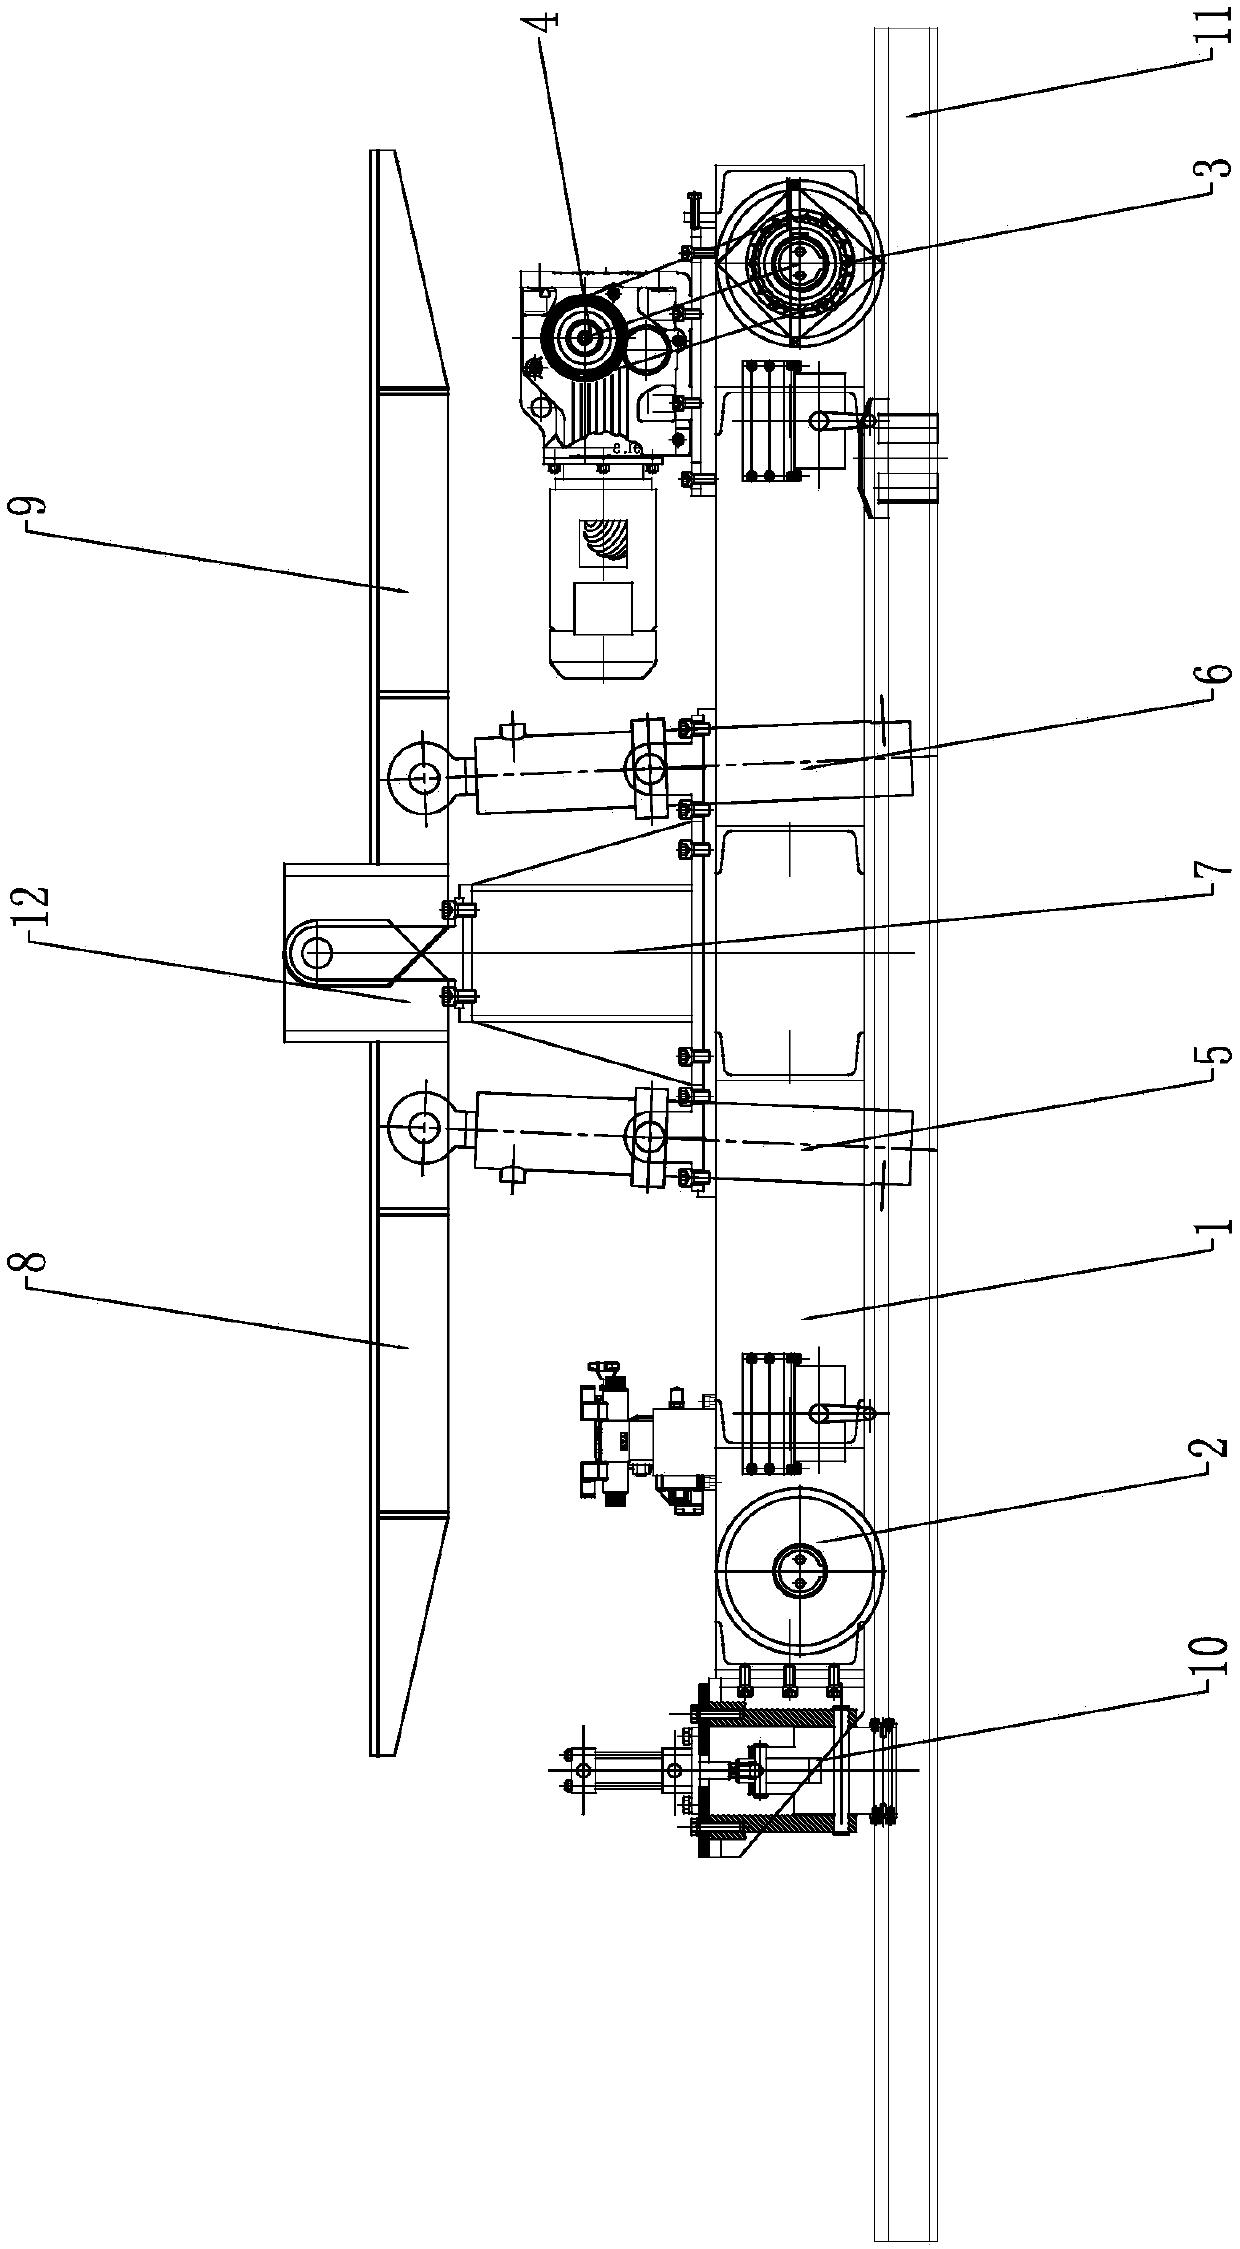 Automatic steel tube bundle overturning mechanism